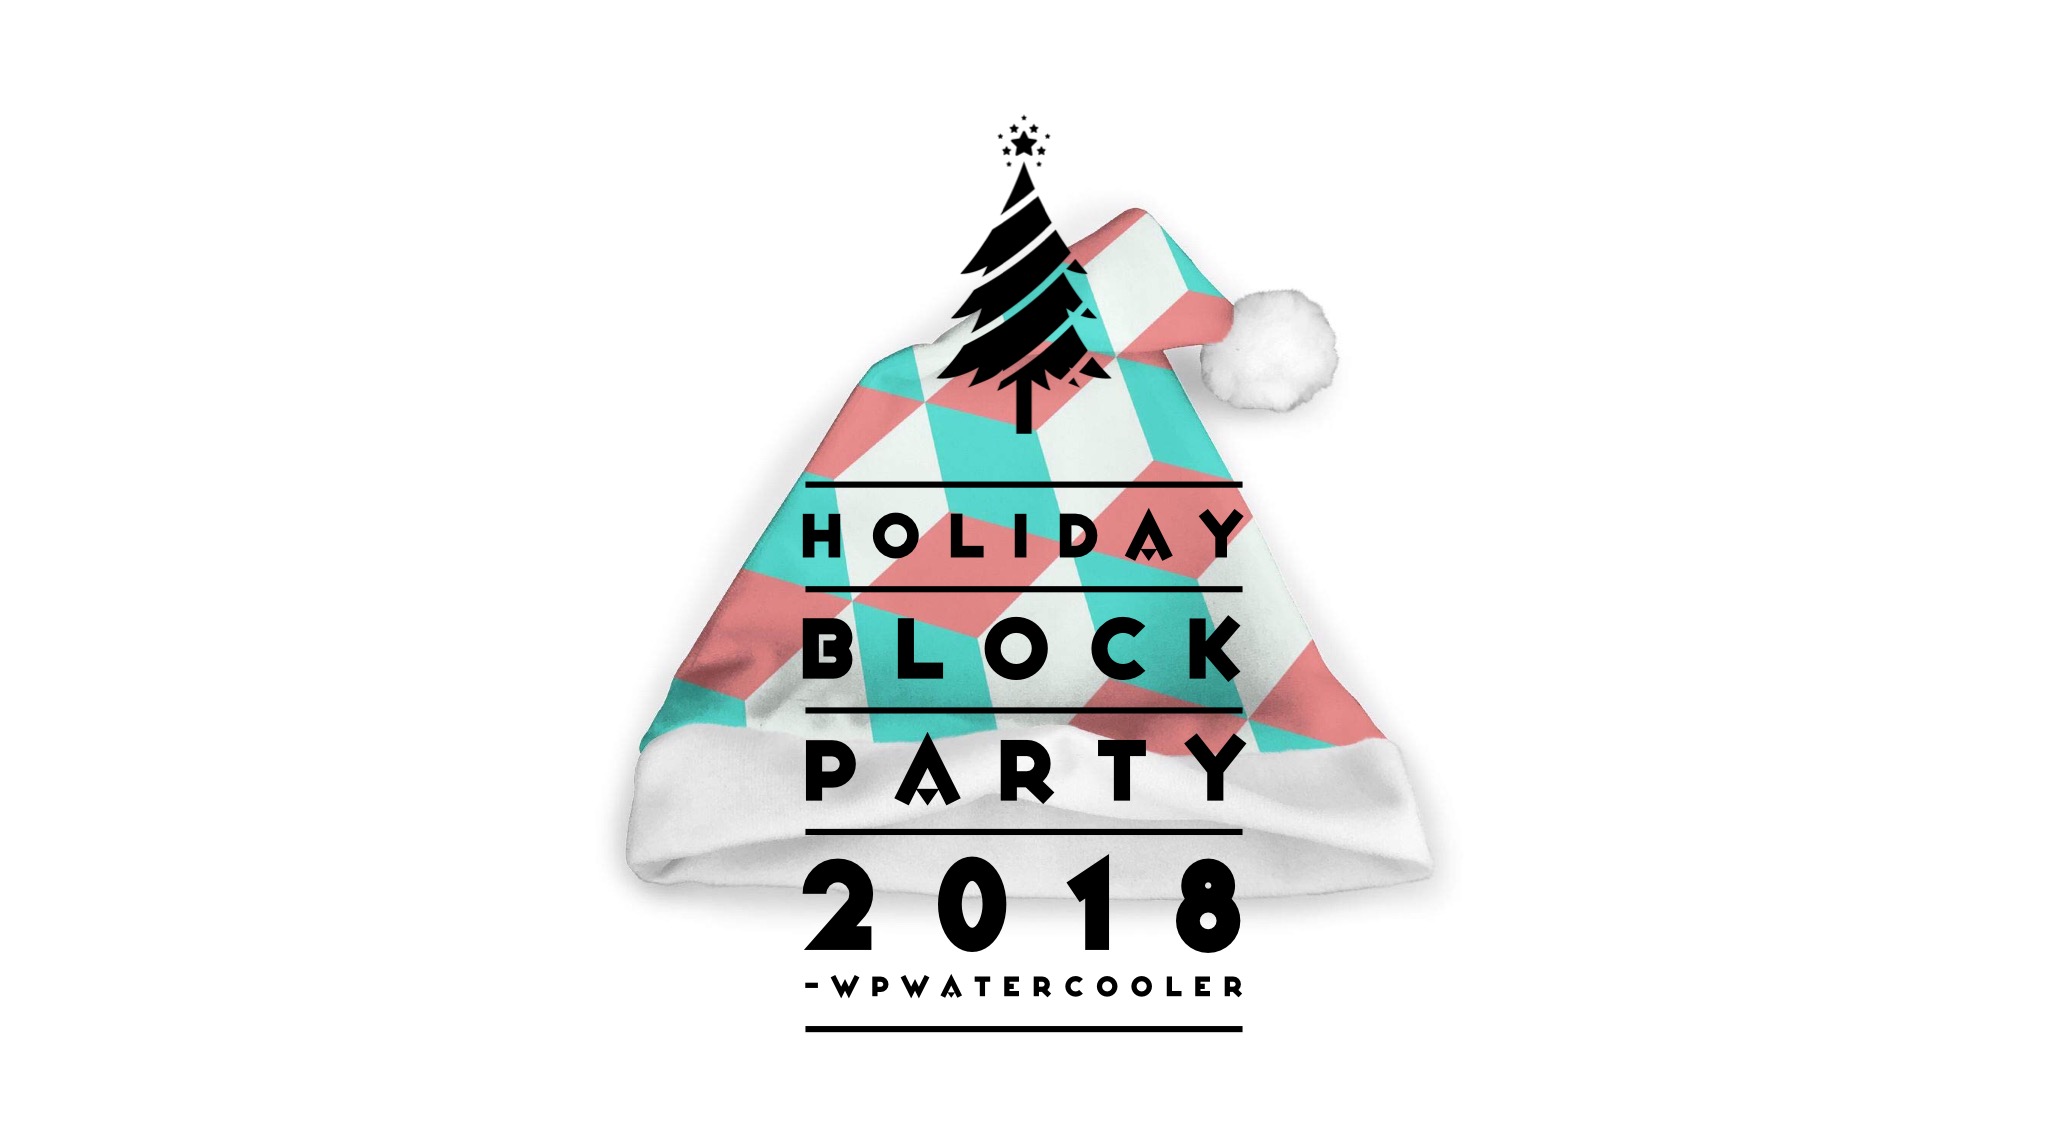 EP301 - Holiday Block Party 2018 - WPwatercooler